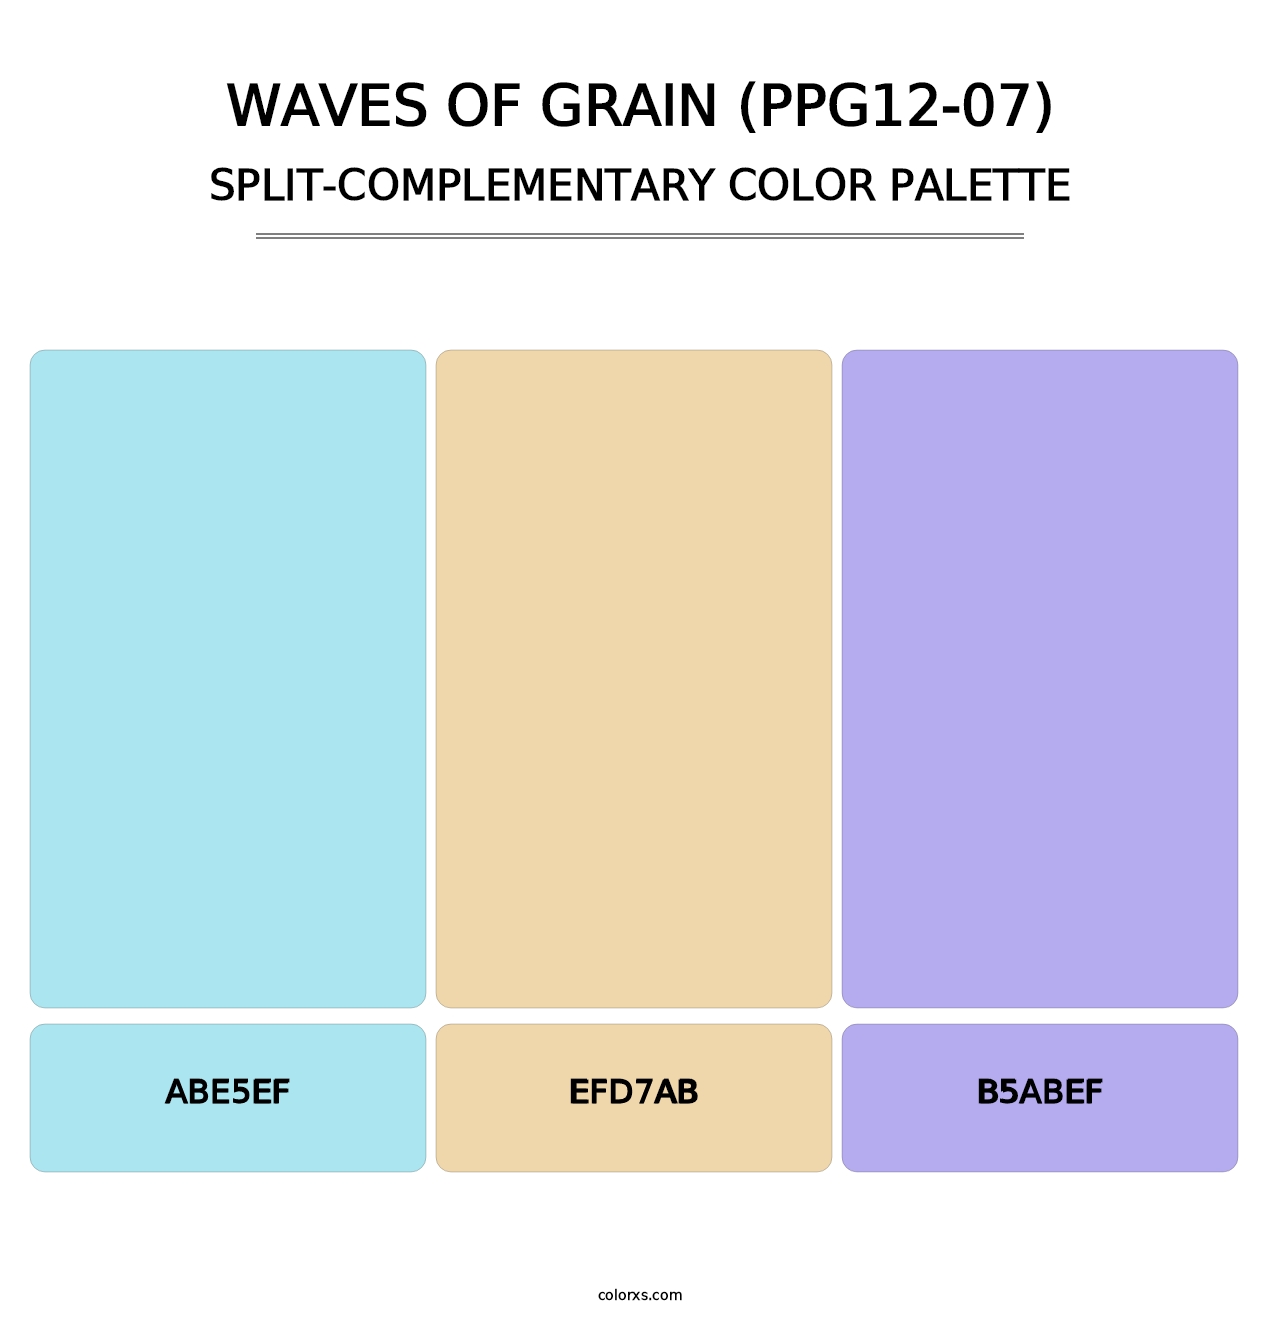 Waves Of Grain (PPG12-07) - Split-Complementary Color Palette